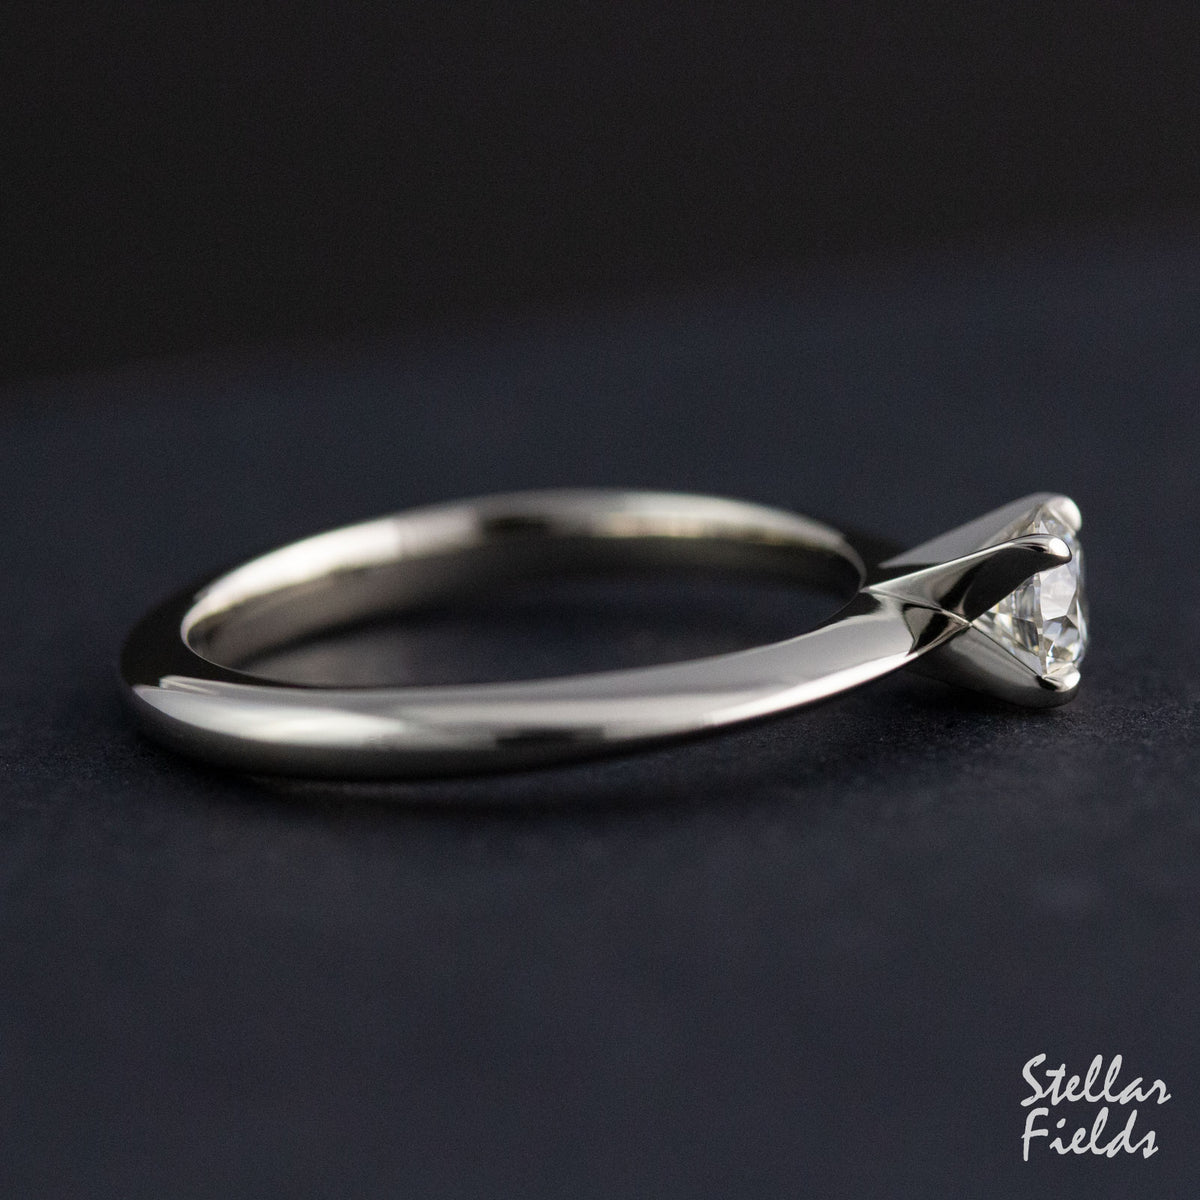 Diamond Engagement Ring Claw Prongs Modern Platinum Stellar Fields Jewelry